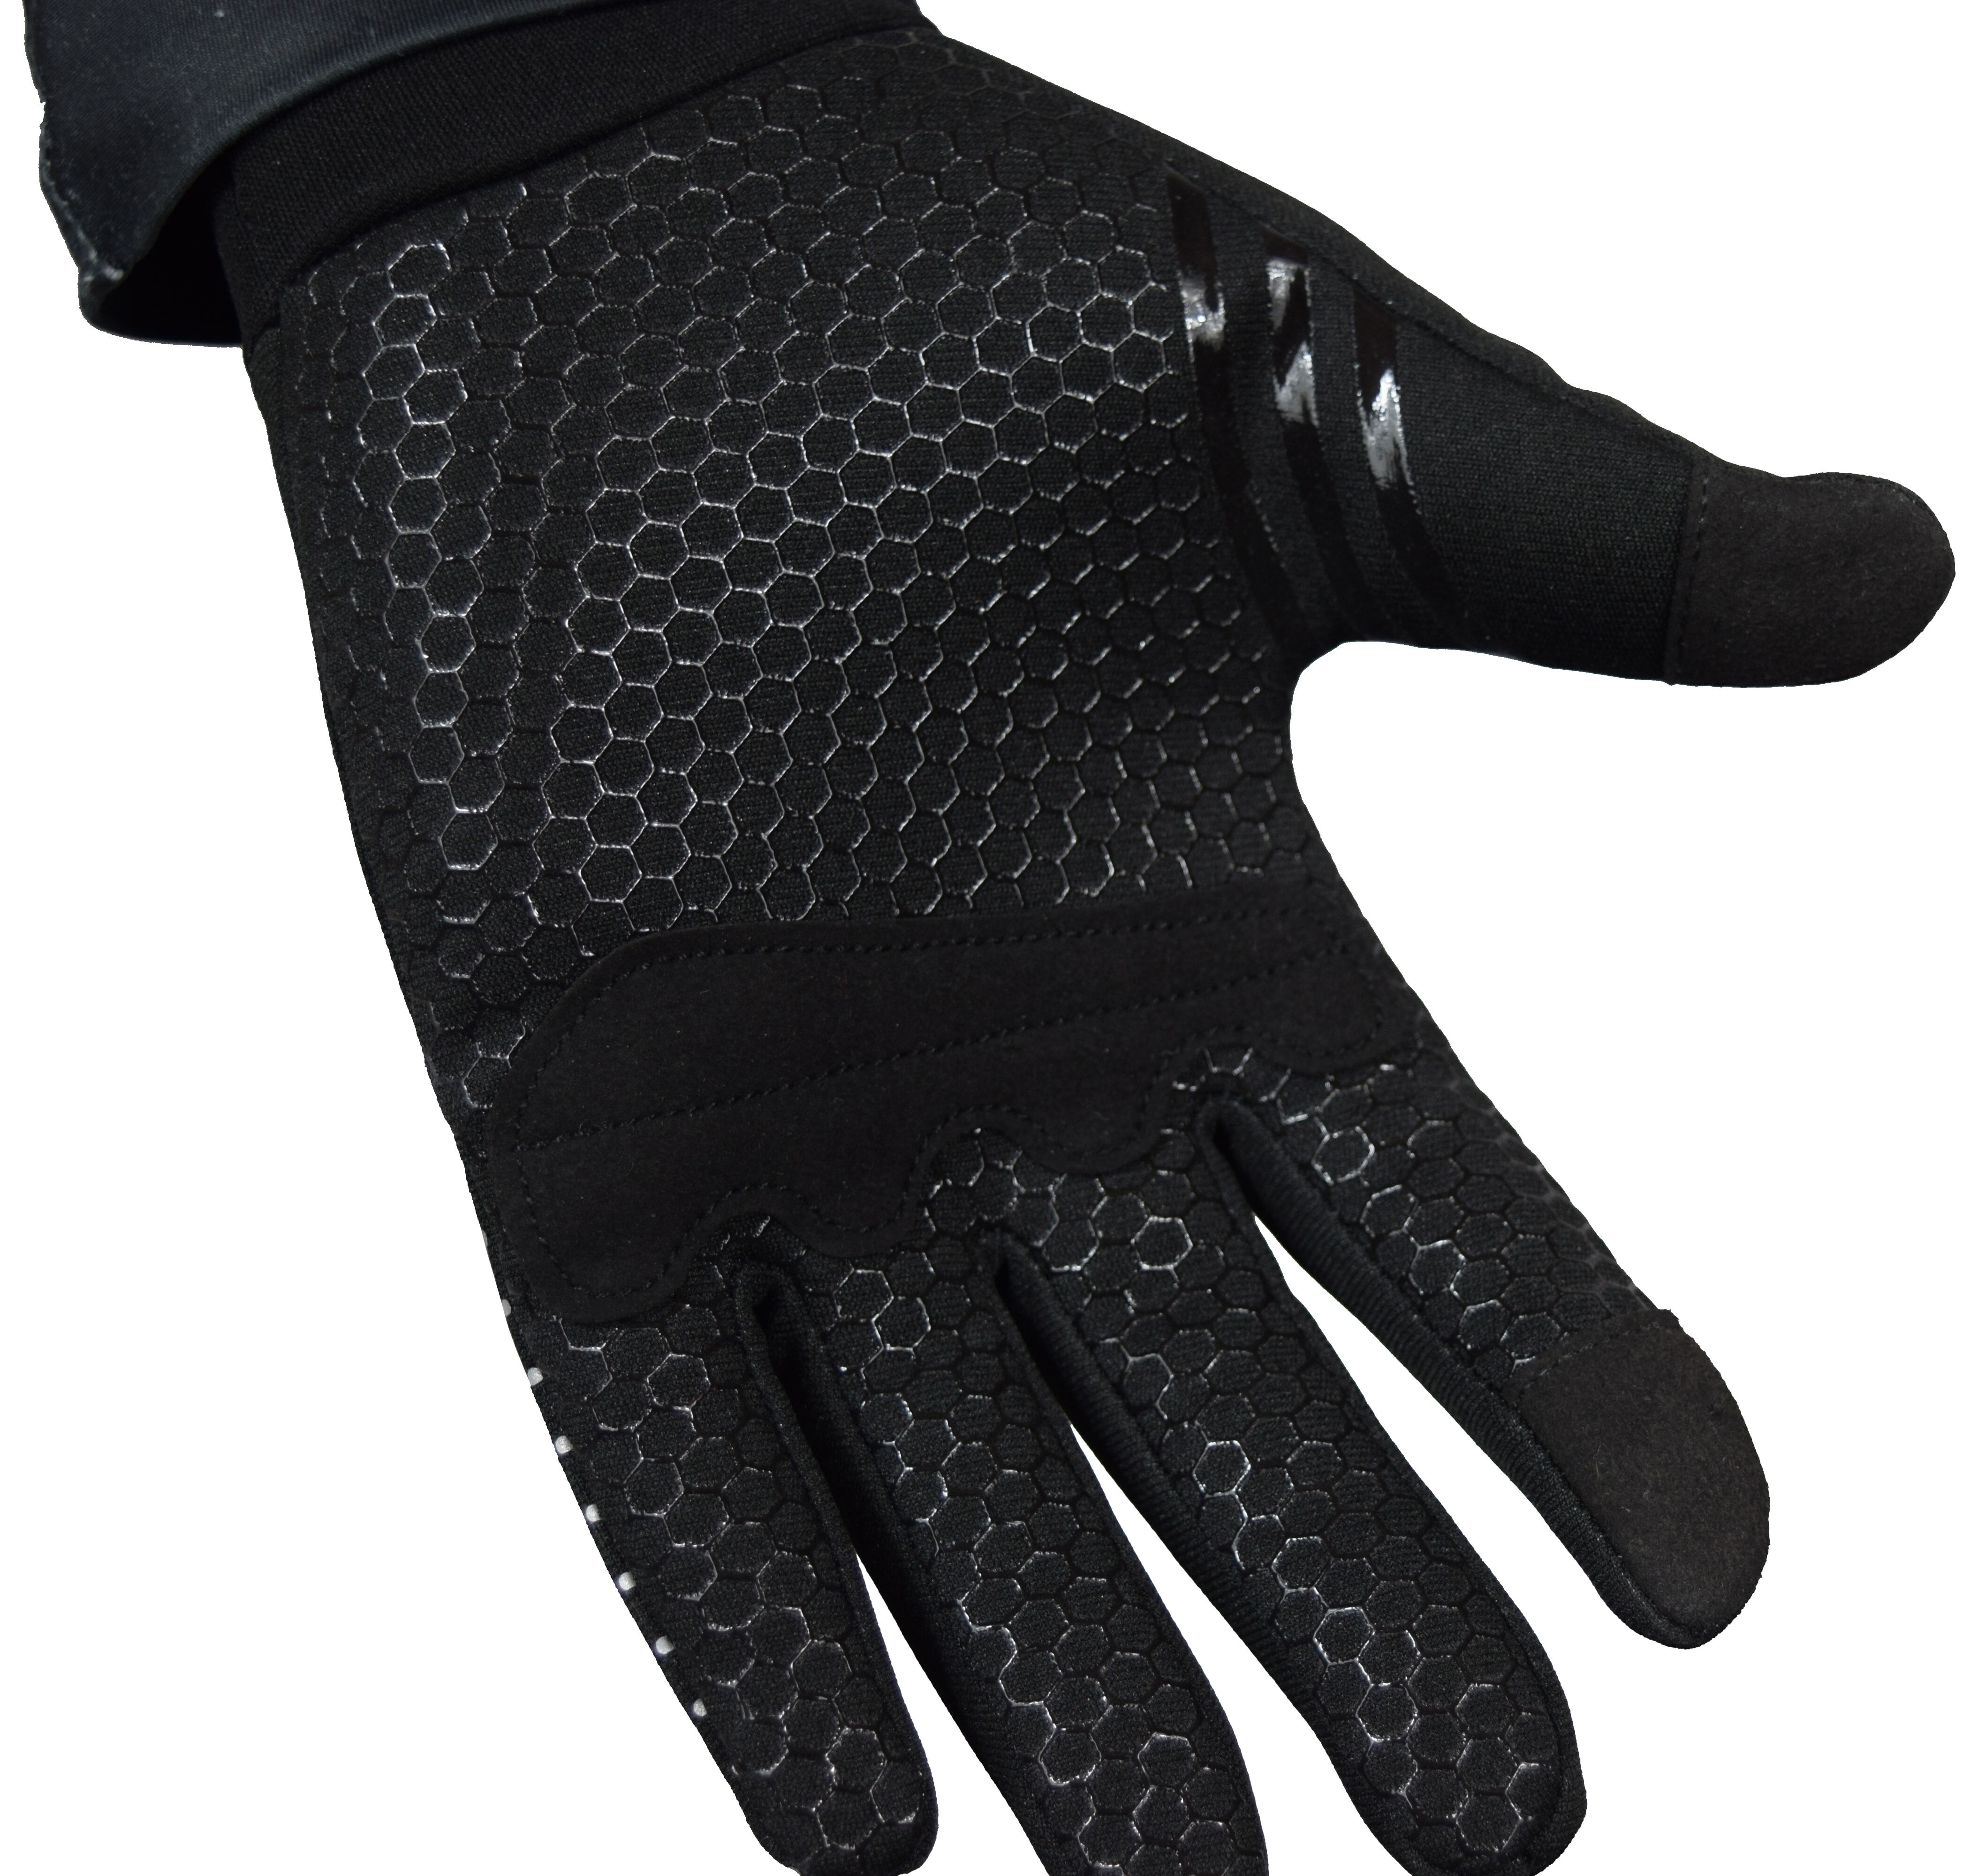 Winter Glove Close Up 2A (1)